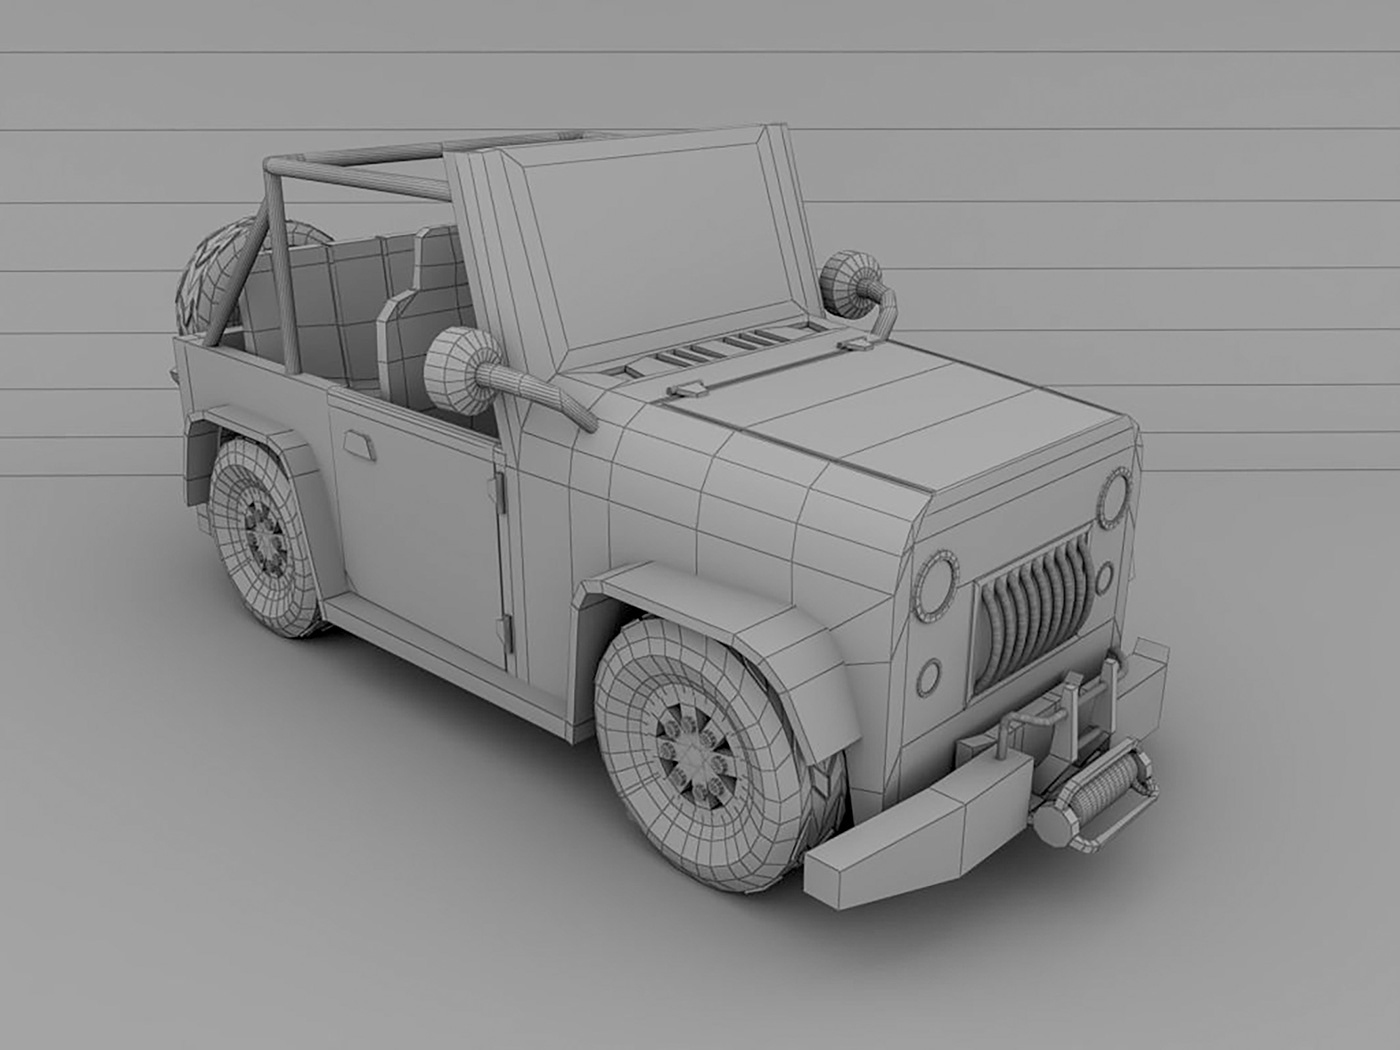 3dmodeling gameart digitalart CGI Polygons behanceportfolio jeepdesign lowpoly Lowpolyart vehicledesign